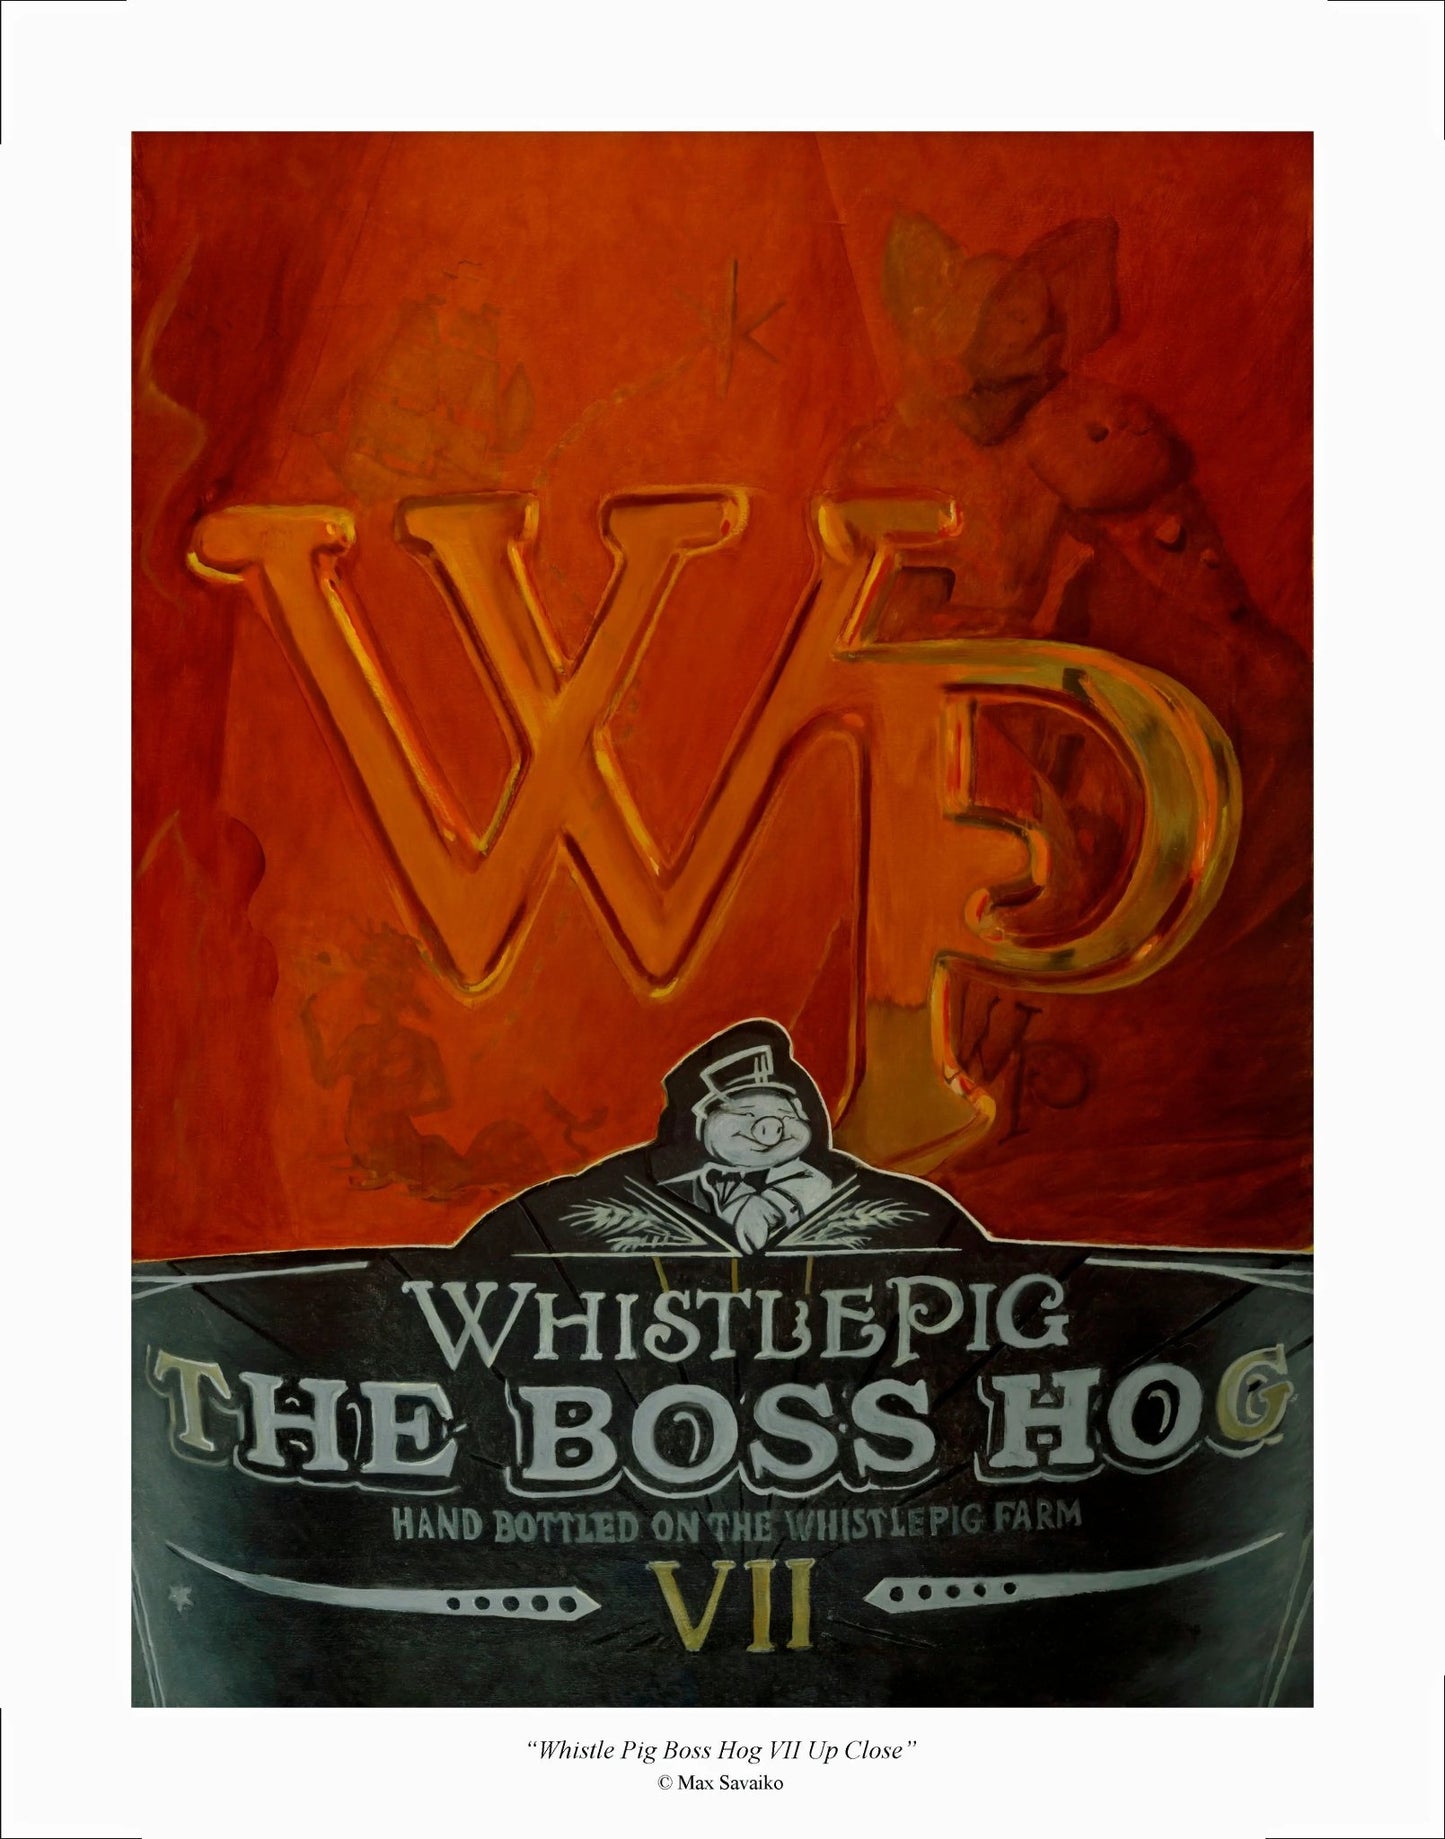 Premium Print - Whistle Pig Boss Hog VII Up Close - Max Savaiko Art